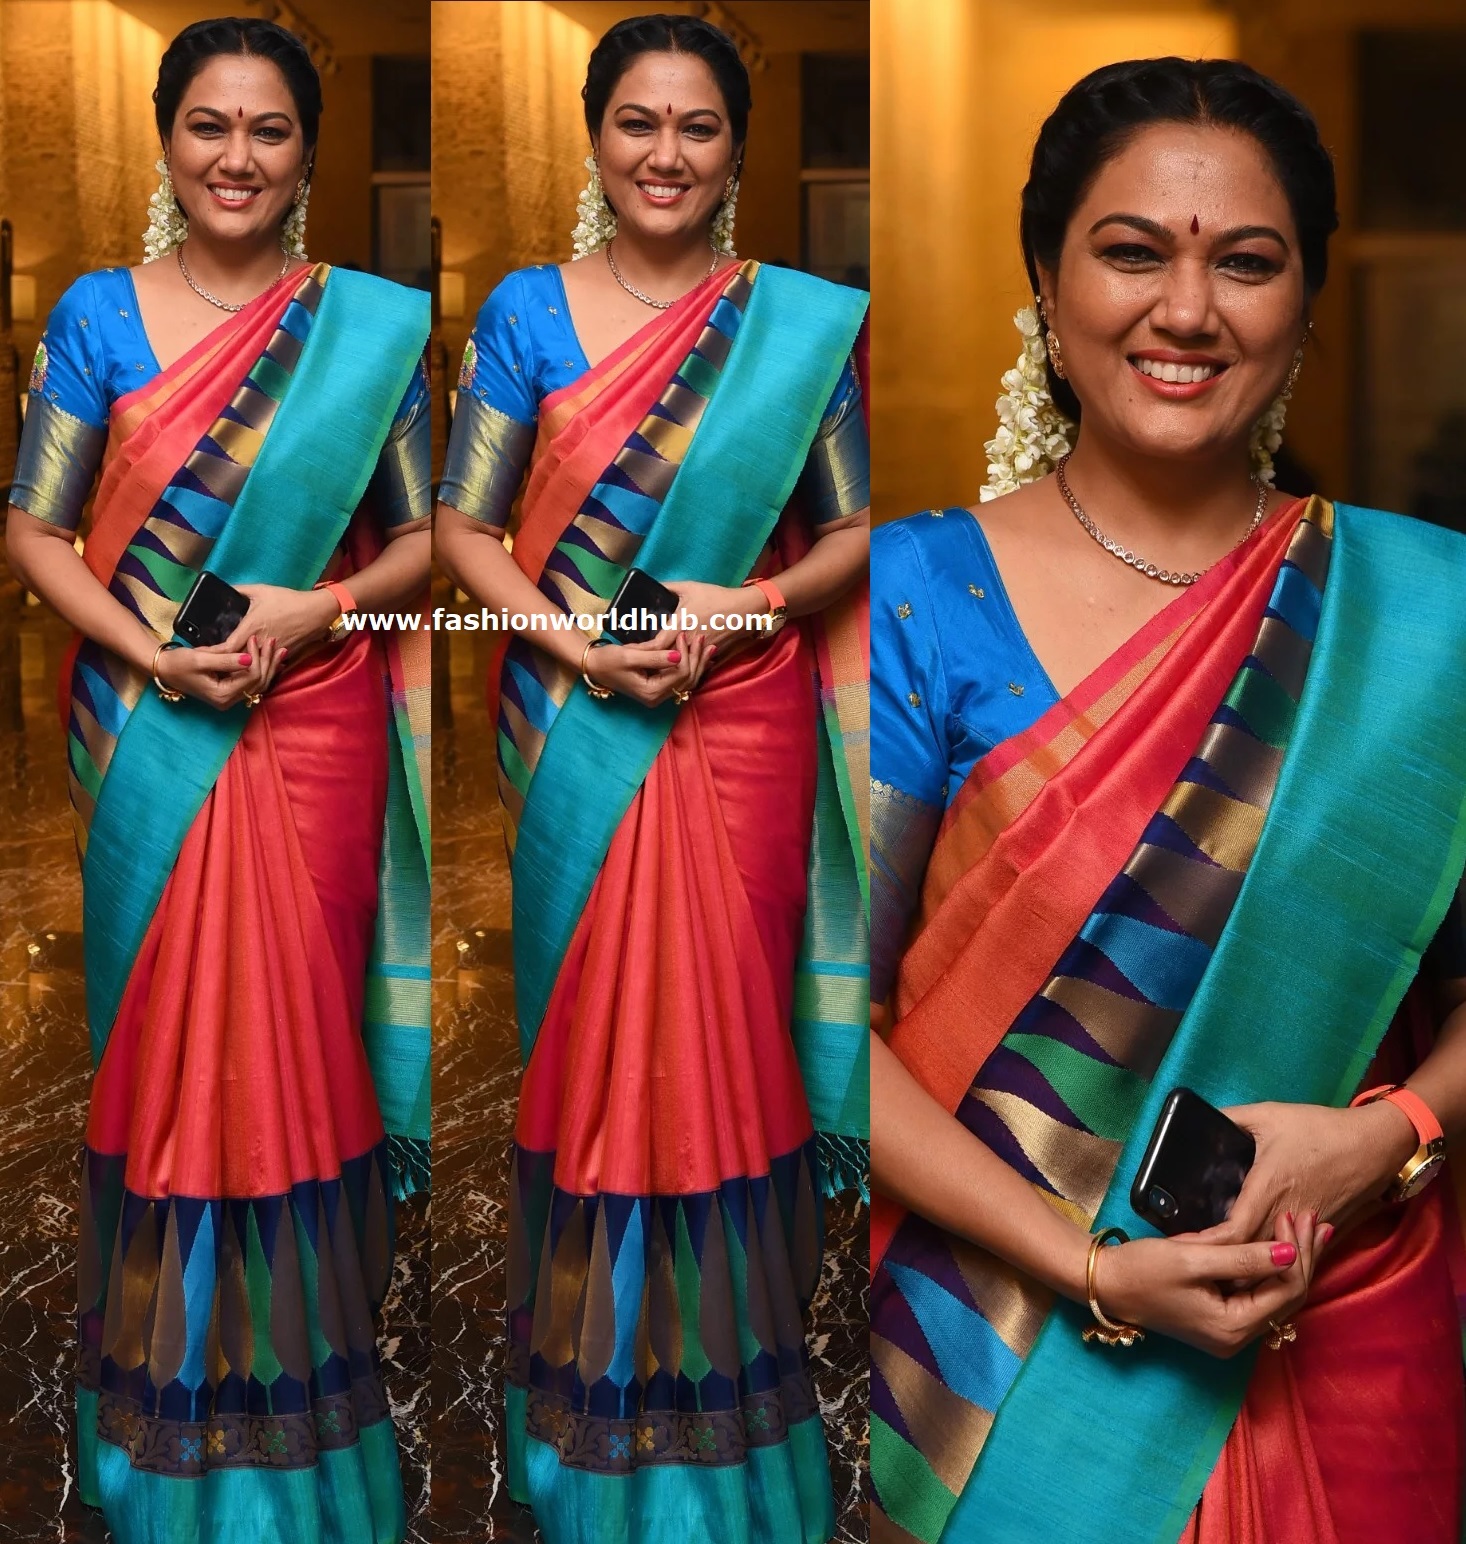 Positief Mentor pijp Hema in a Traditional saree! | Fashionworldhub